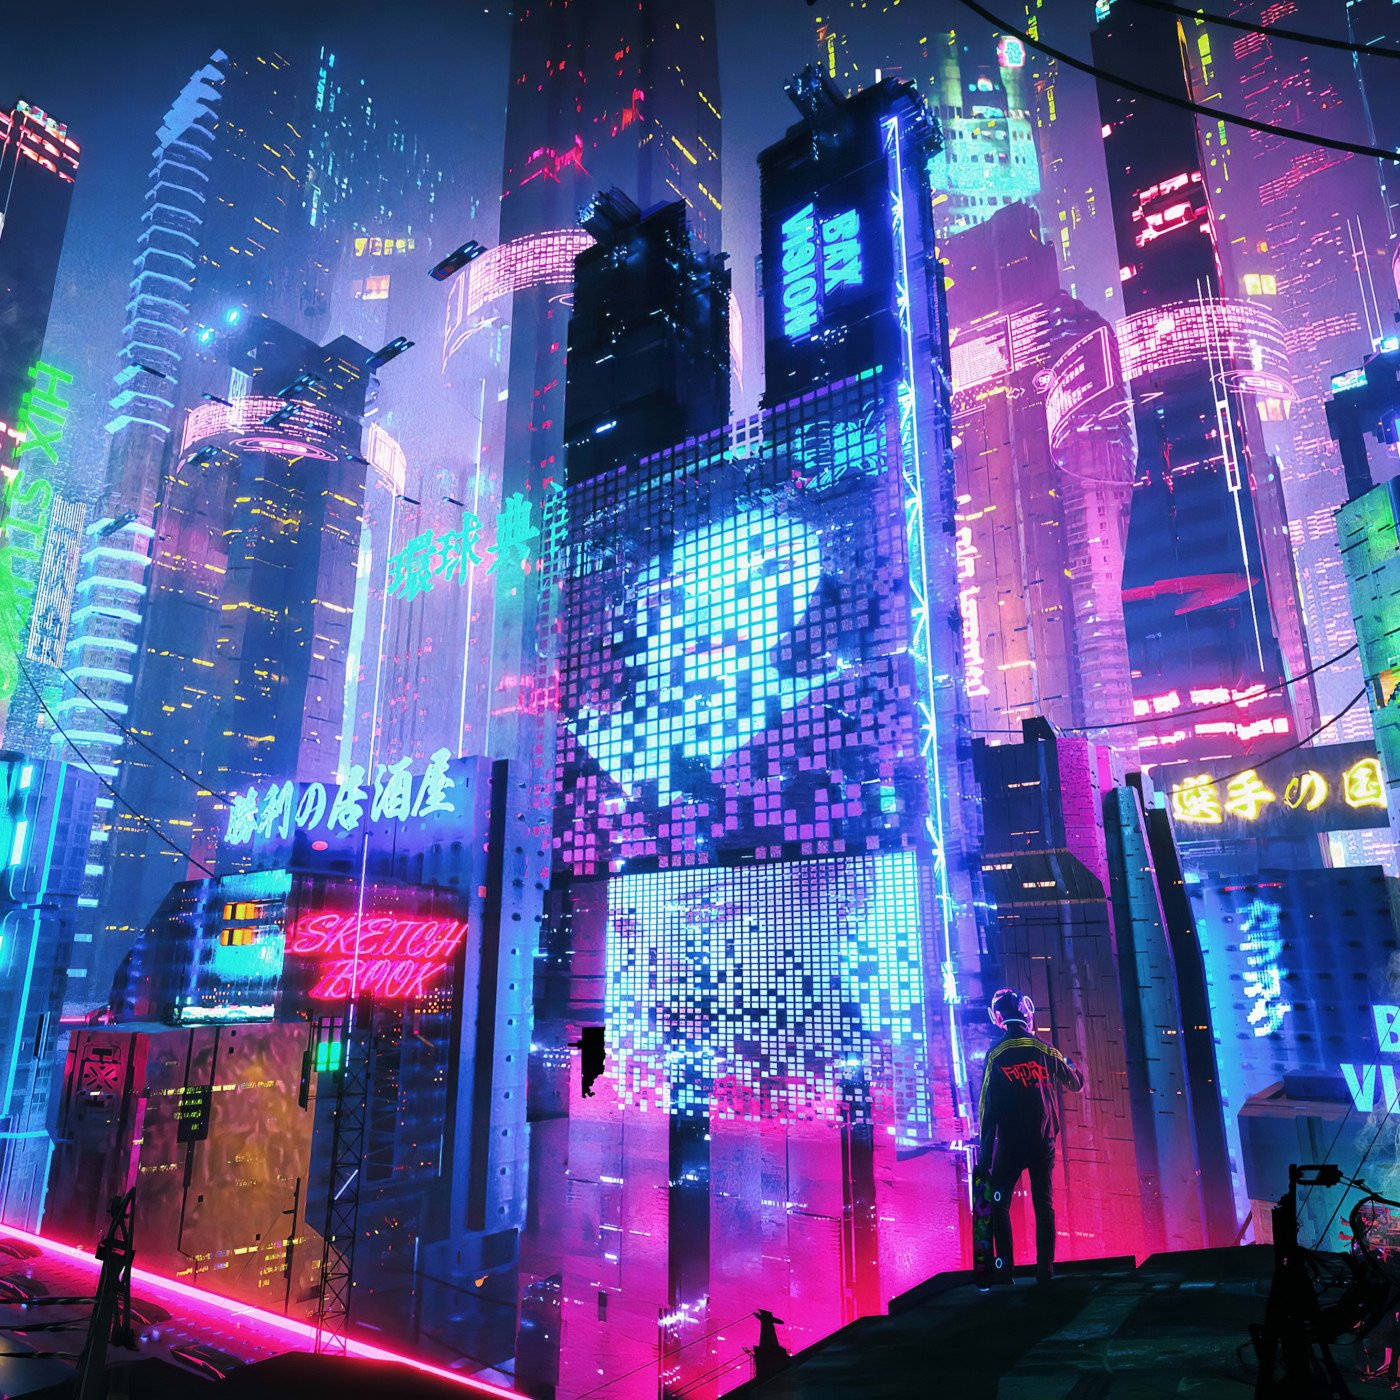 Neon Lights Illuminating the City Nightscape Wallpaper